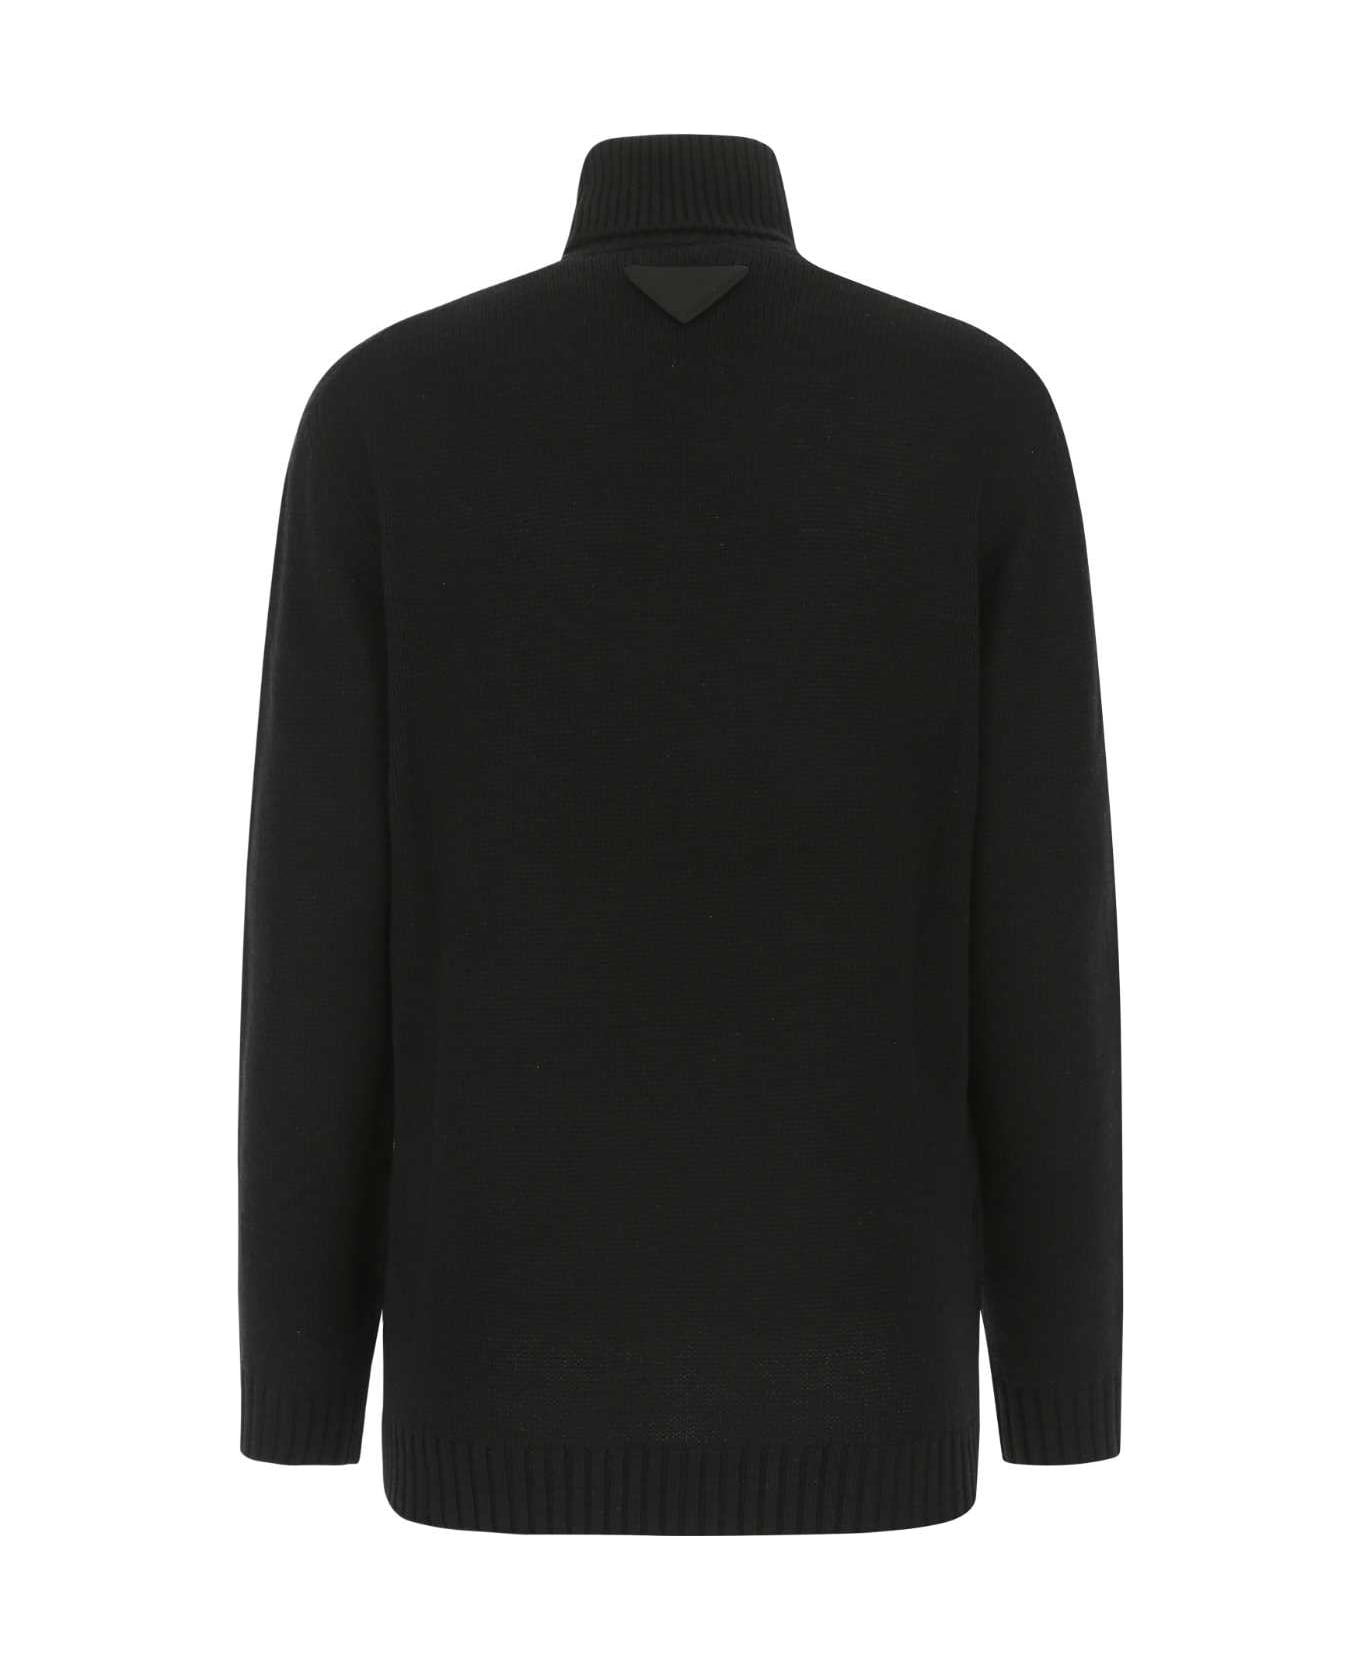 Prada Black Cashmere Sweater - F0002